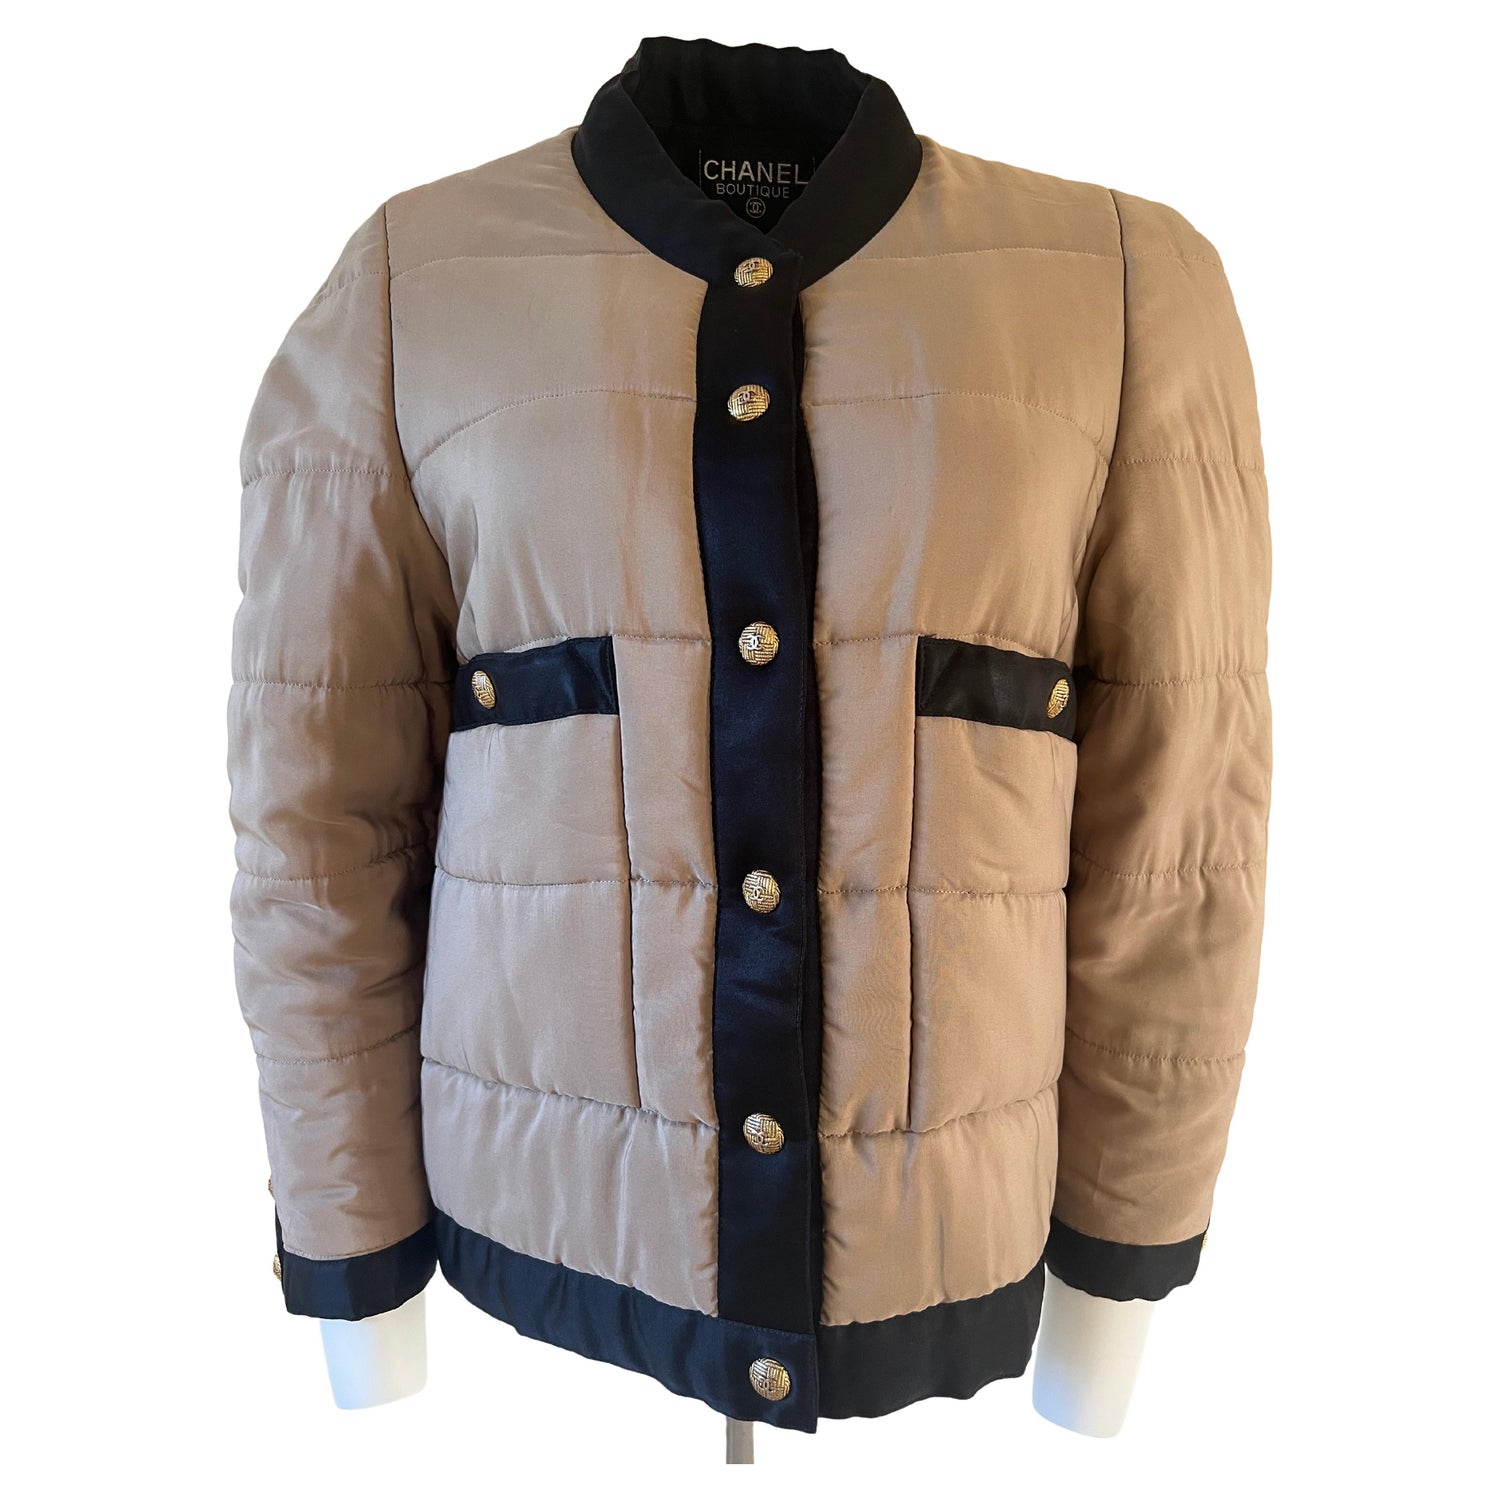 Chanel Puffer Coats & Jackets